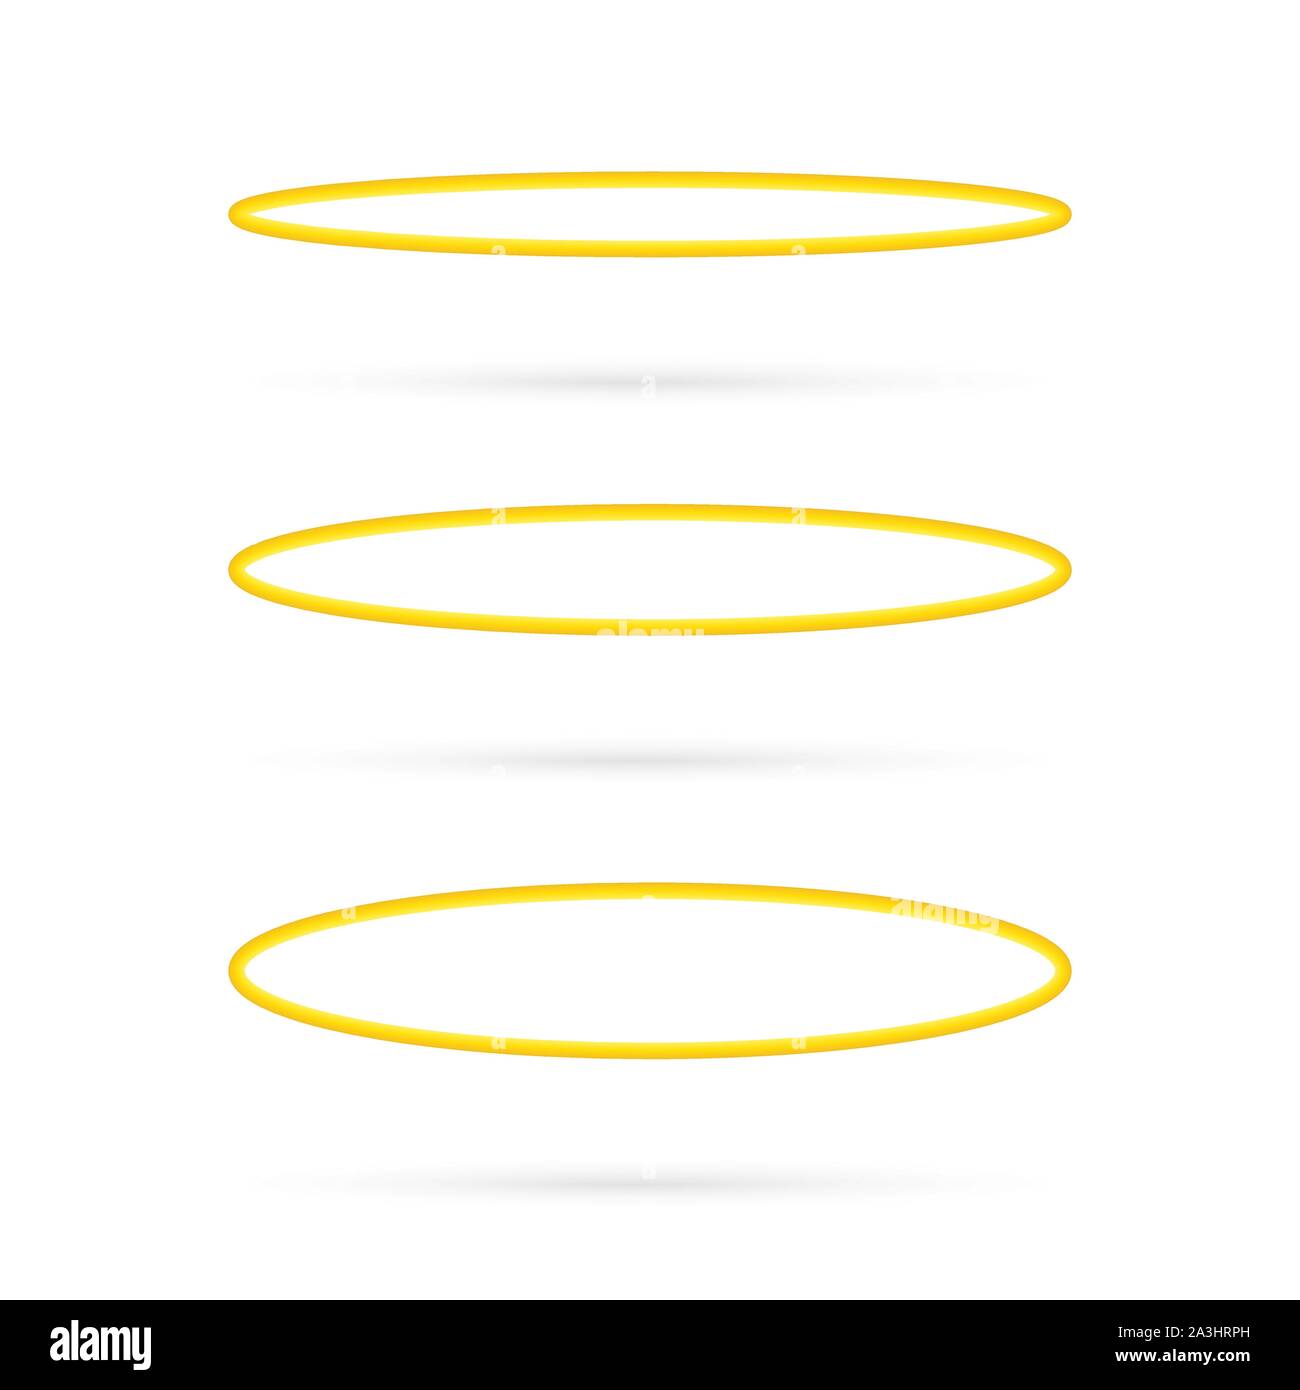 Premium Vector | Golden halo ring yellow round angel and saint symbol